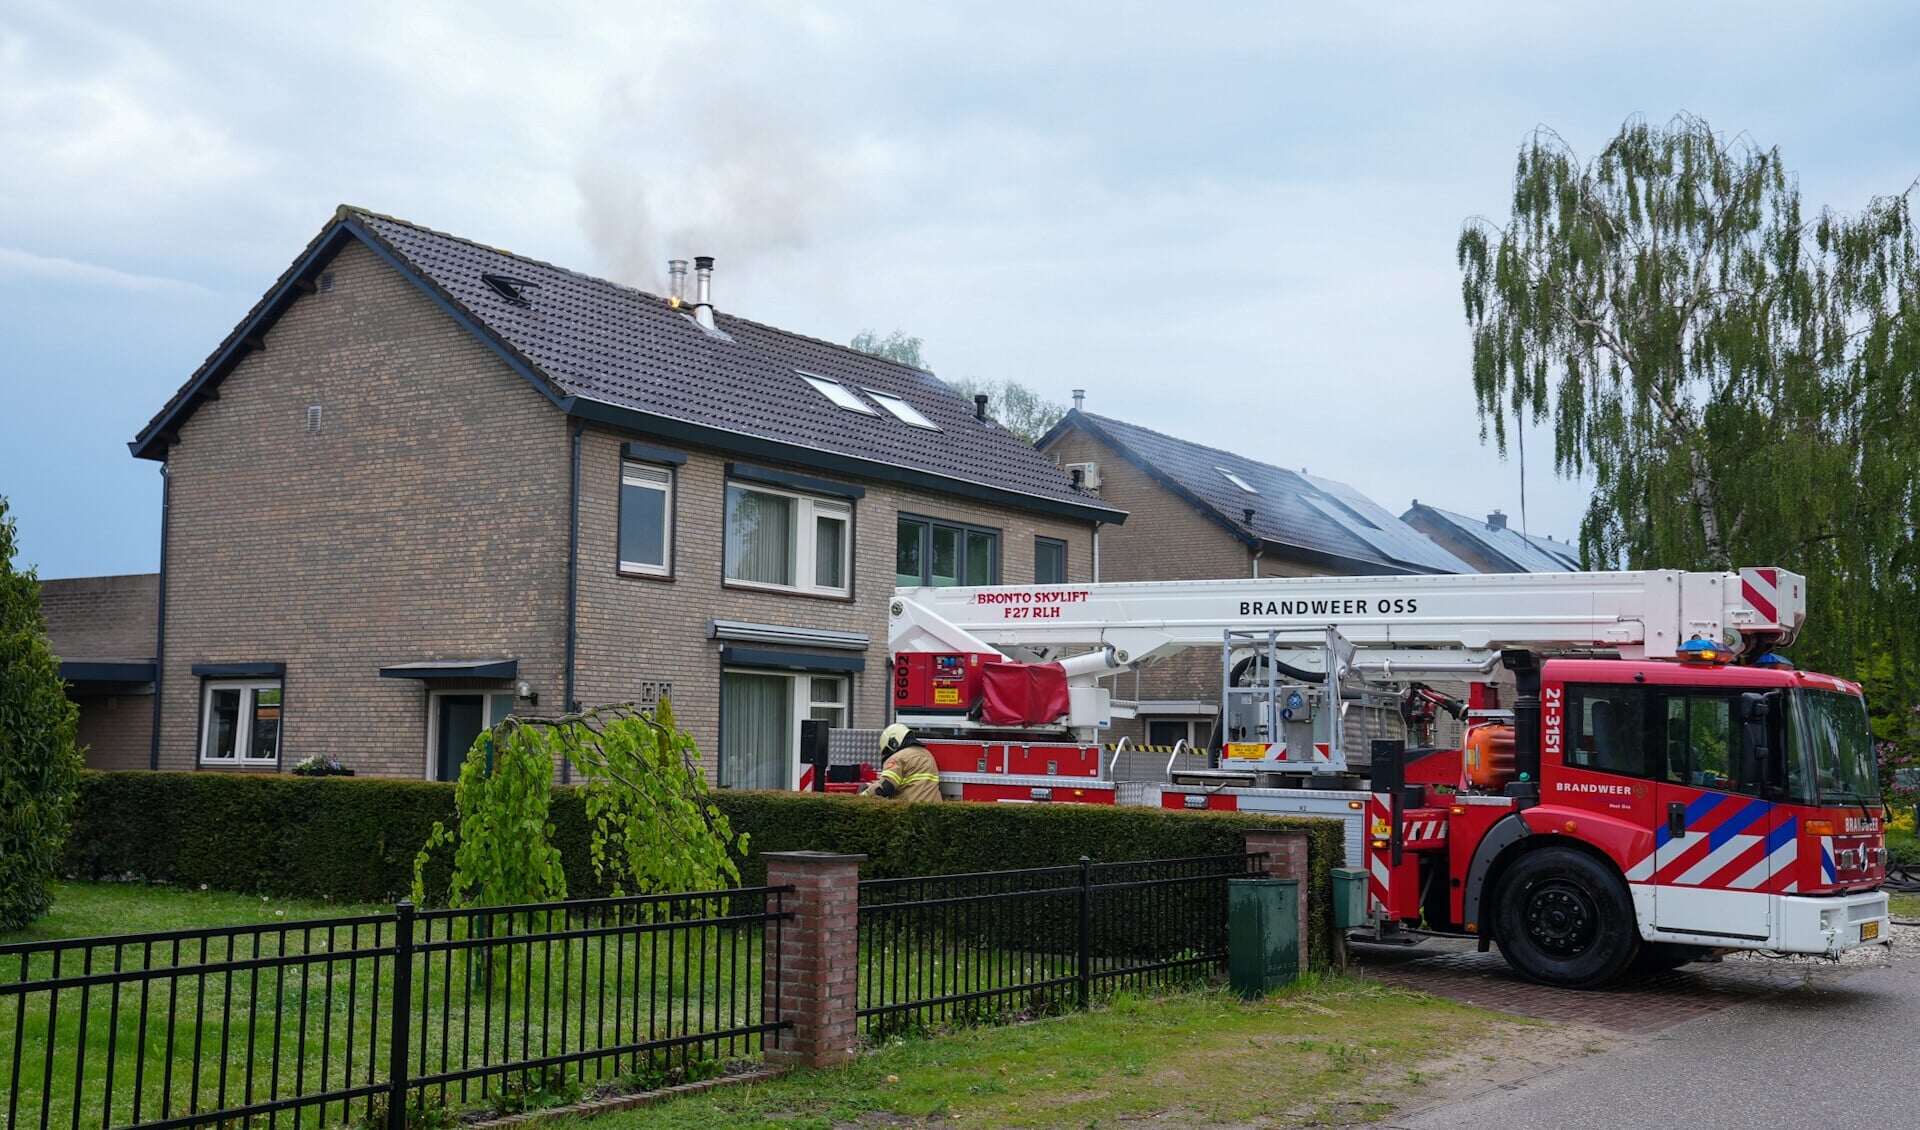 Felle zolderbrand in Deursen-Dennenburg. (Foto: Gabor Heeres, Foto Mallo)